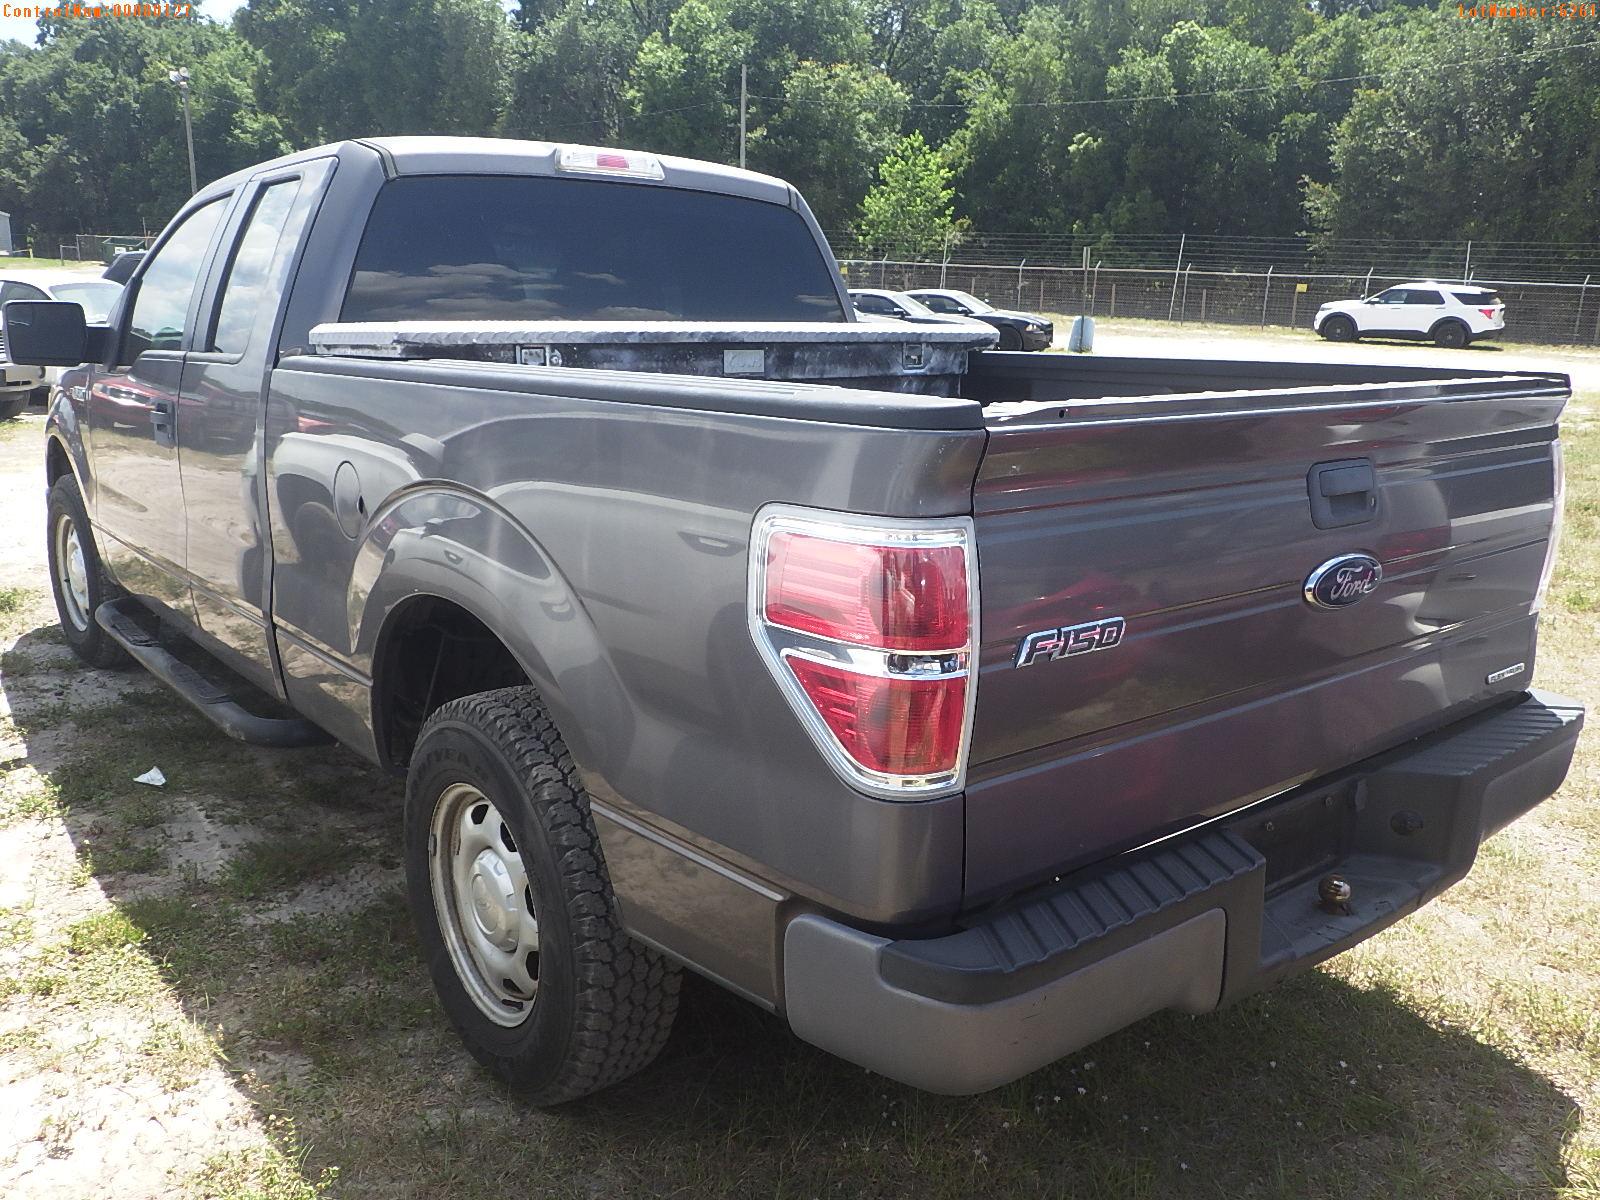 5-06261 (Trucks-Pickup 2D)  Seller: Gov-Pinellas County Sheriffs Ofc 2013 FORD F